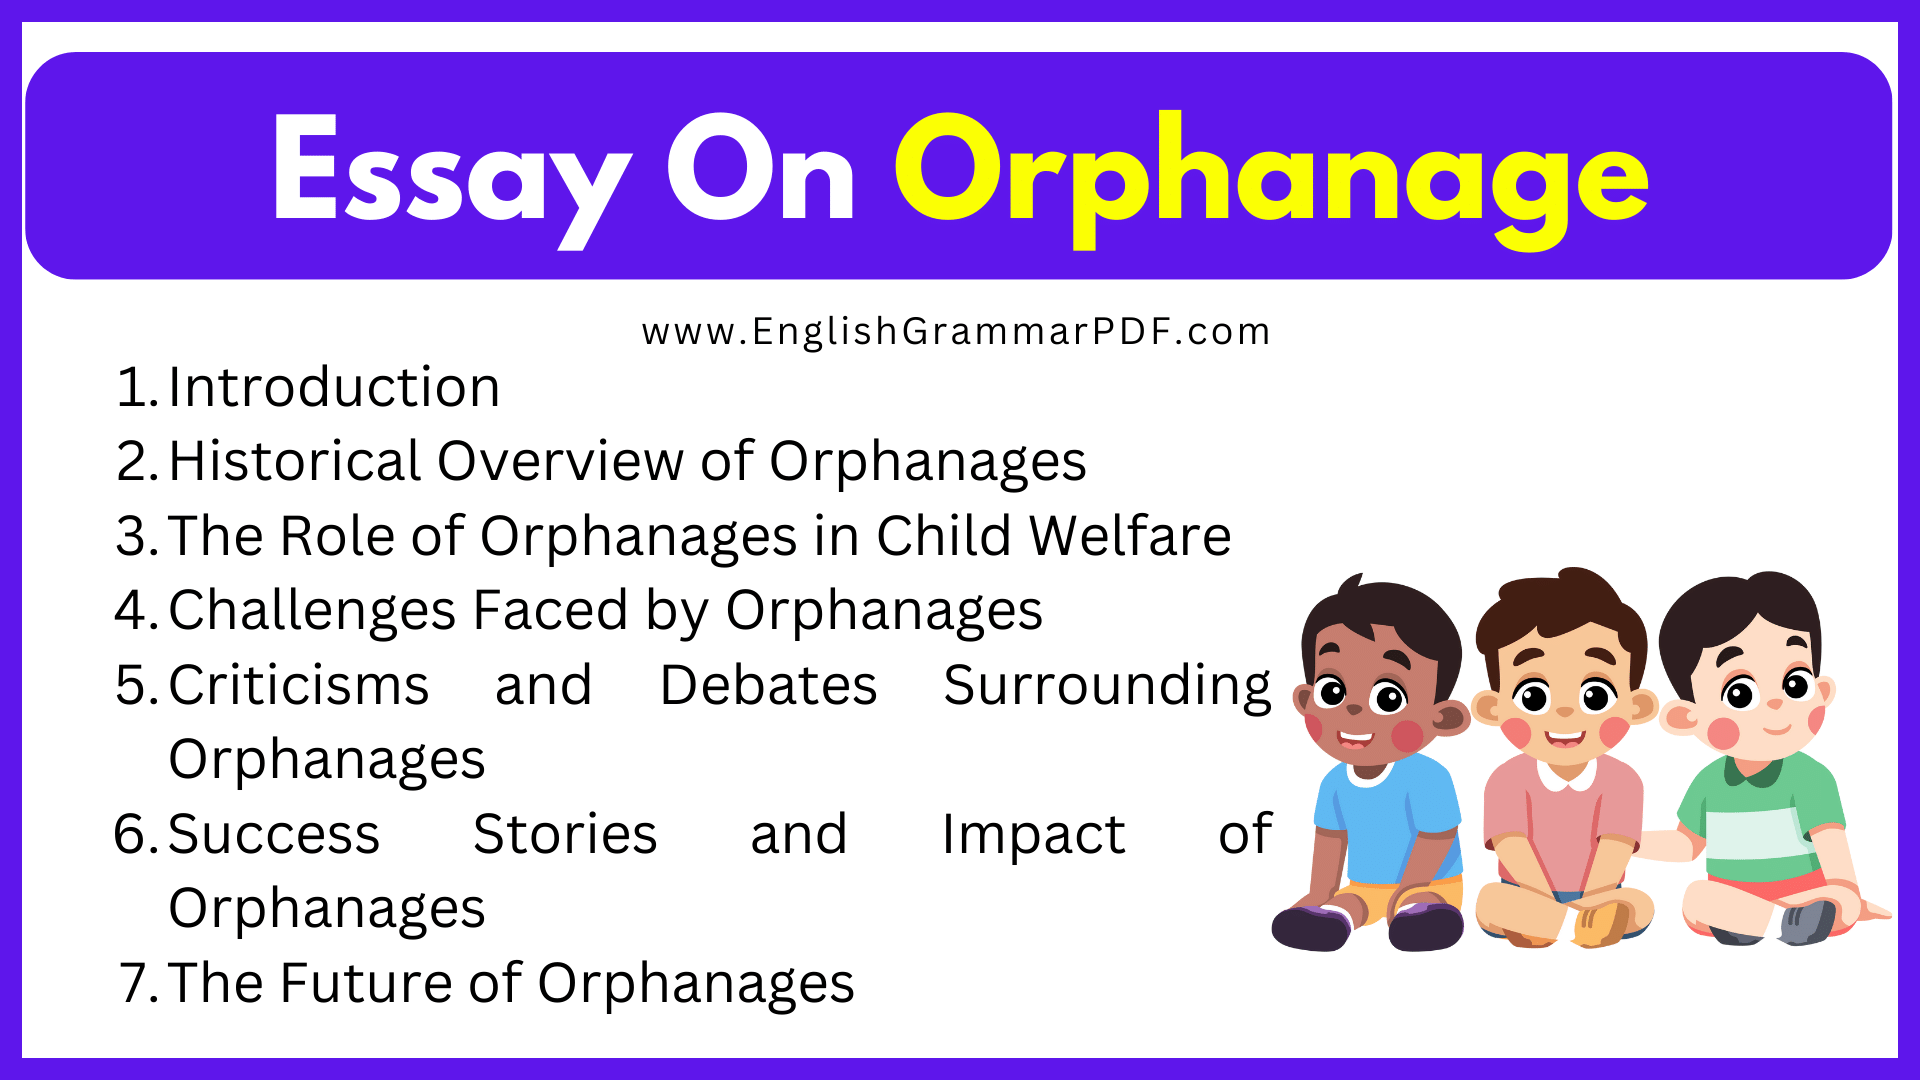 Essay On Orphanage